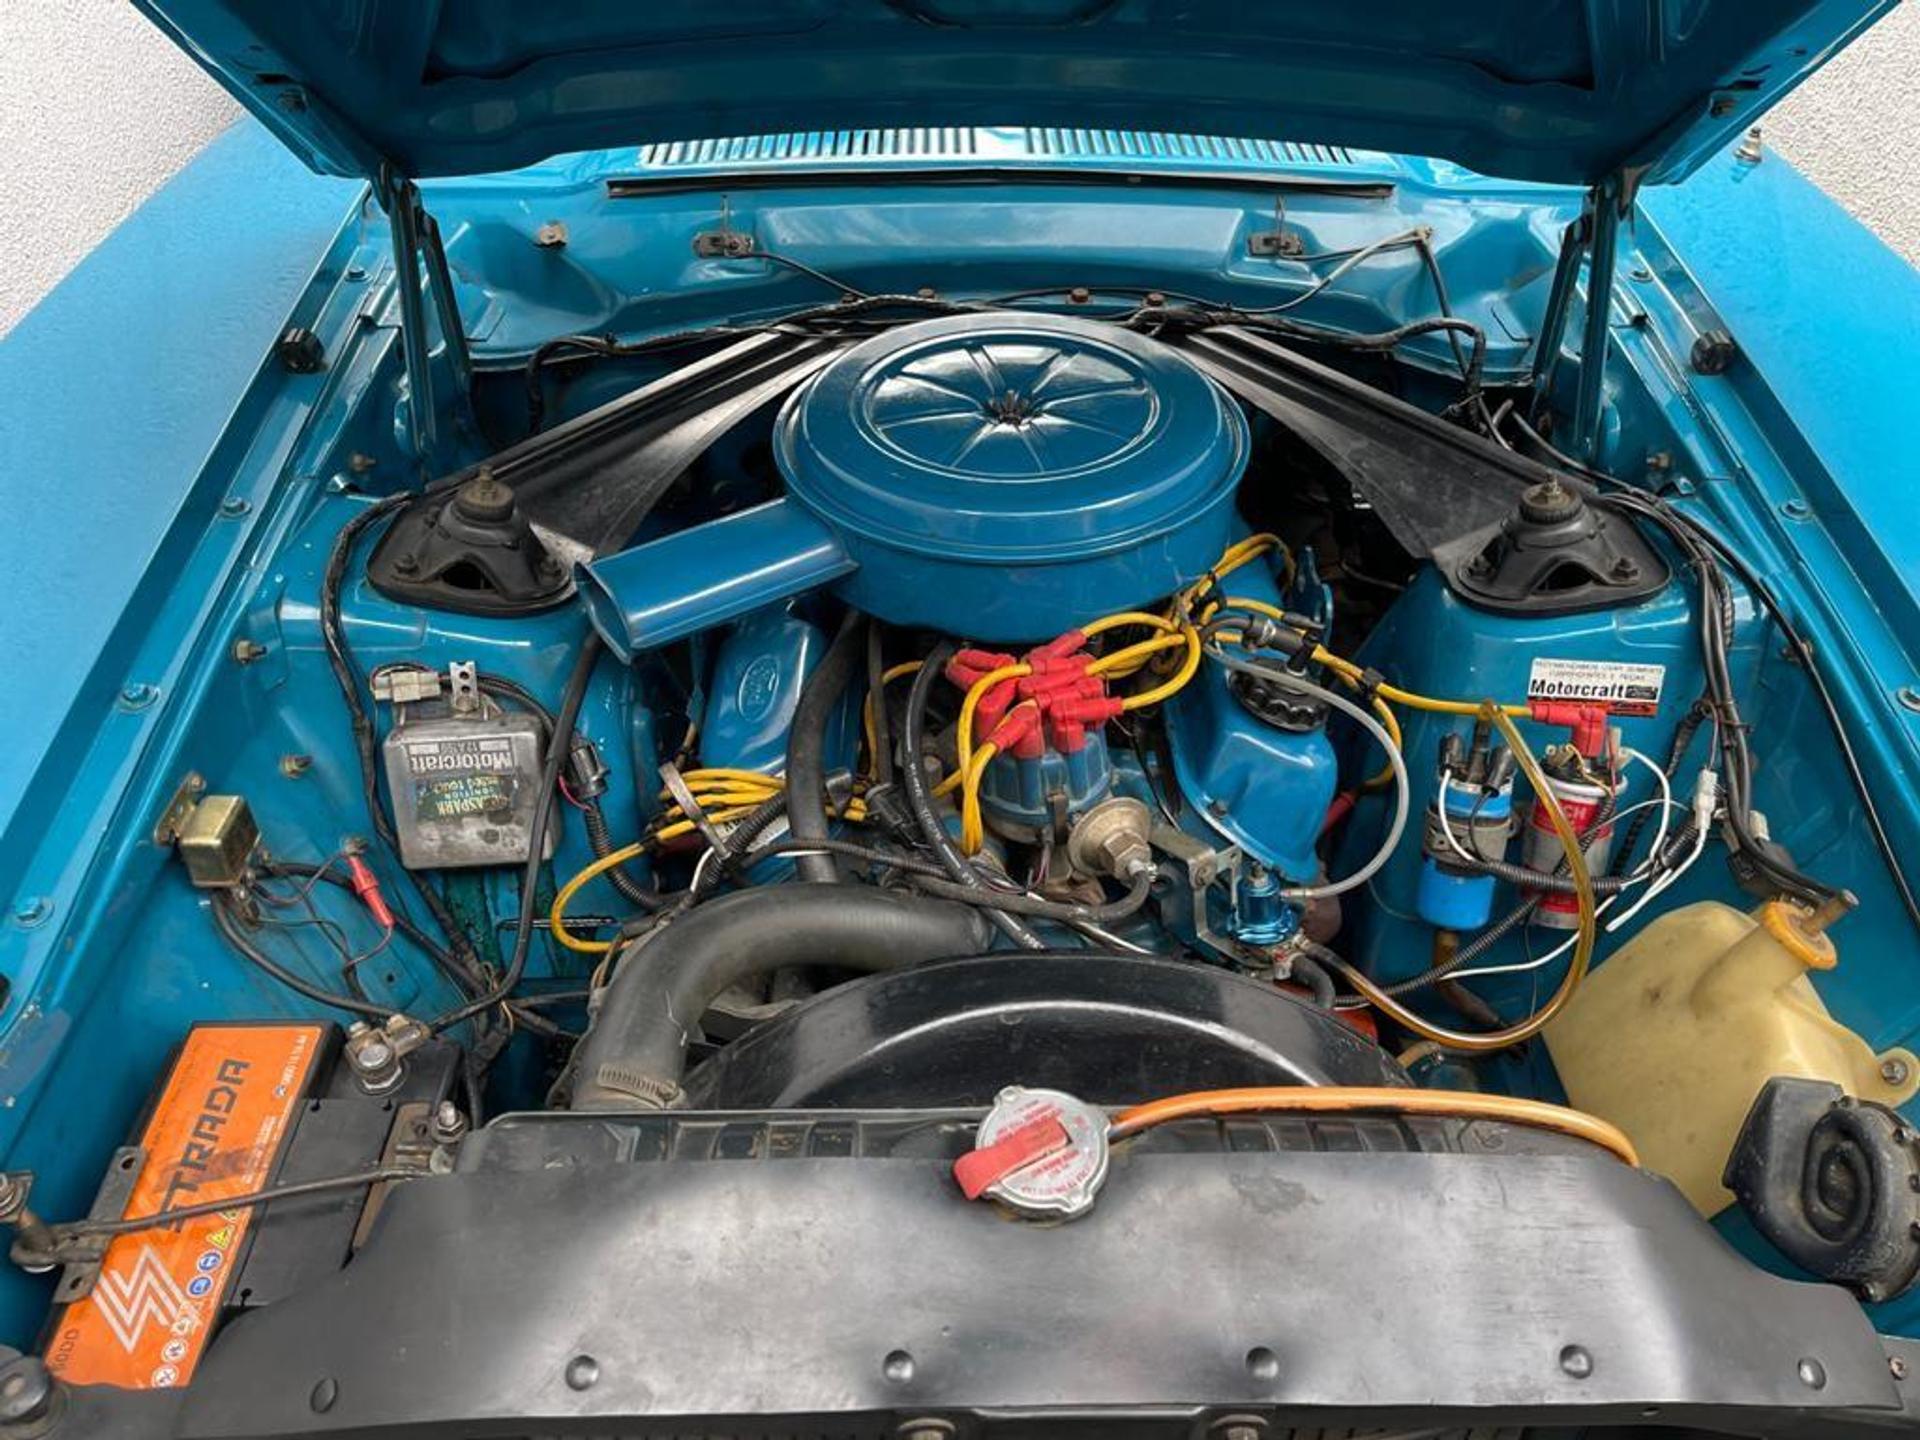 Ford Maverick 5.0 Super Luxo V8 16v Gasolina 2p Manual Wmimagem16005334423